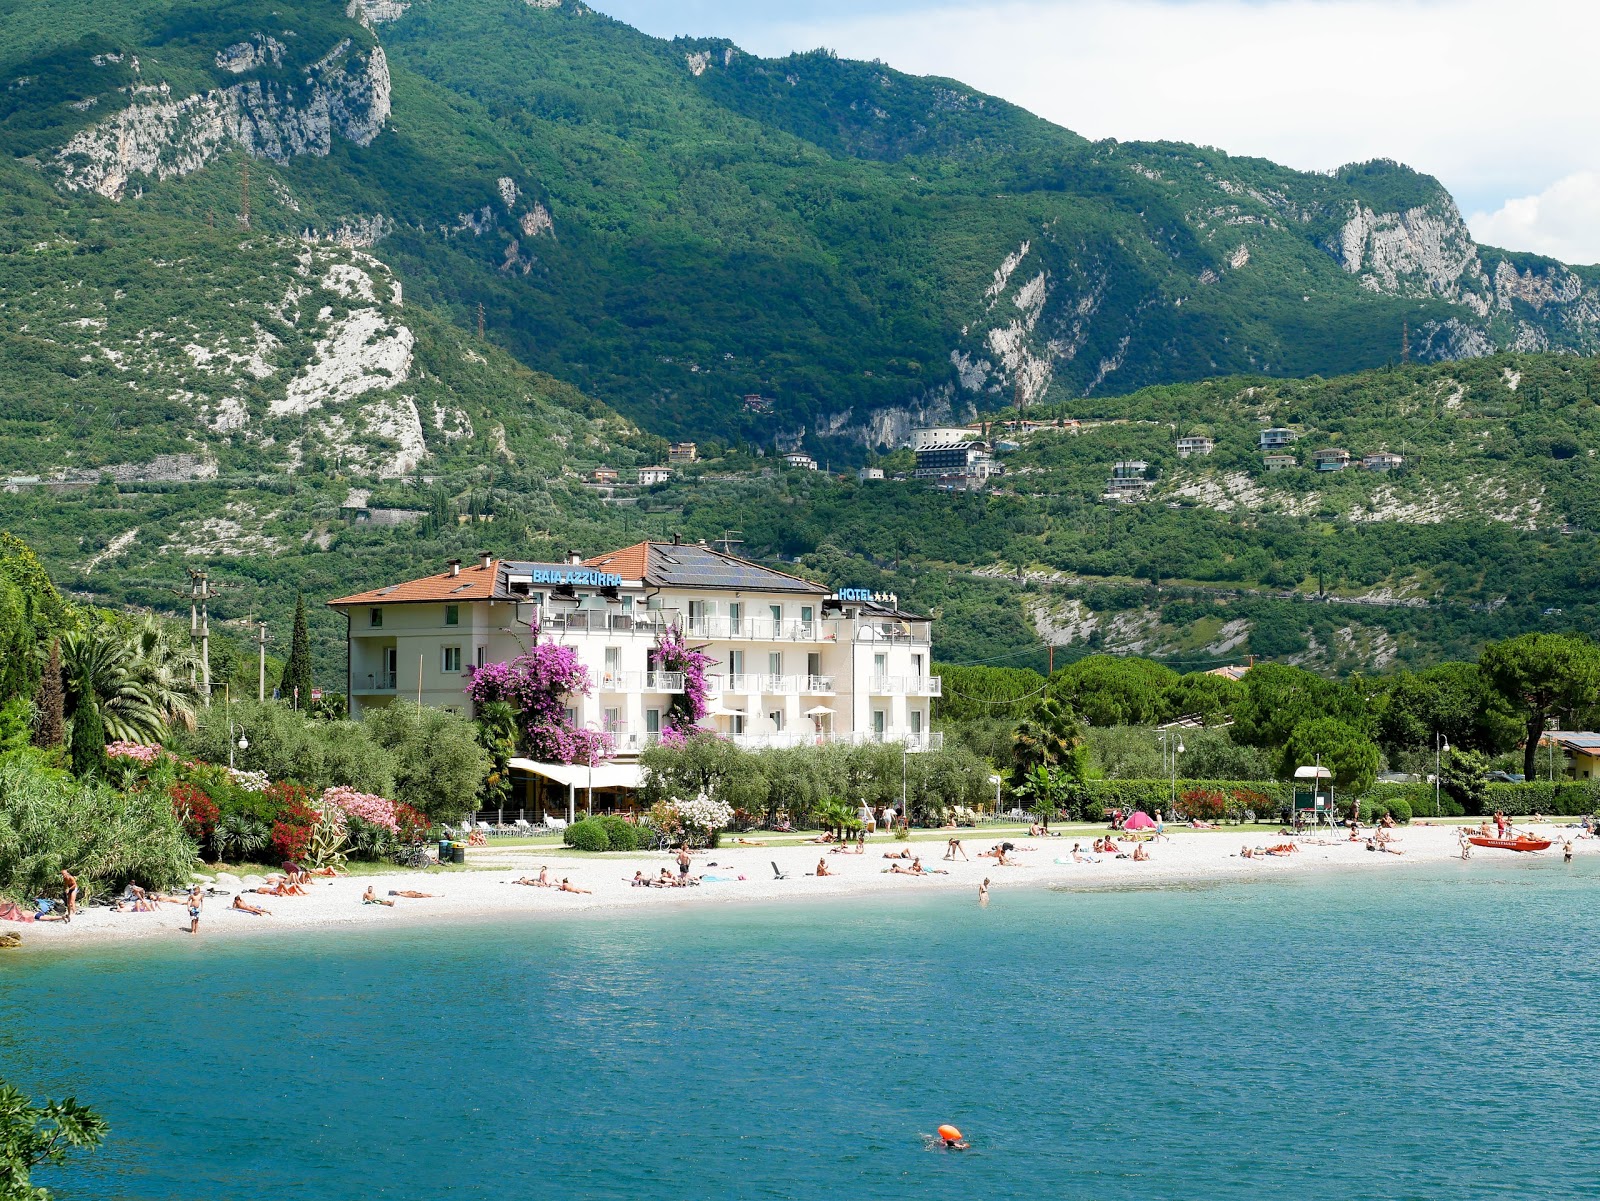 Photo of Spiaggia Lido di Arco with spacious bay